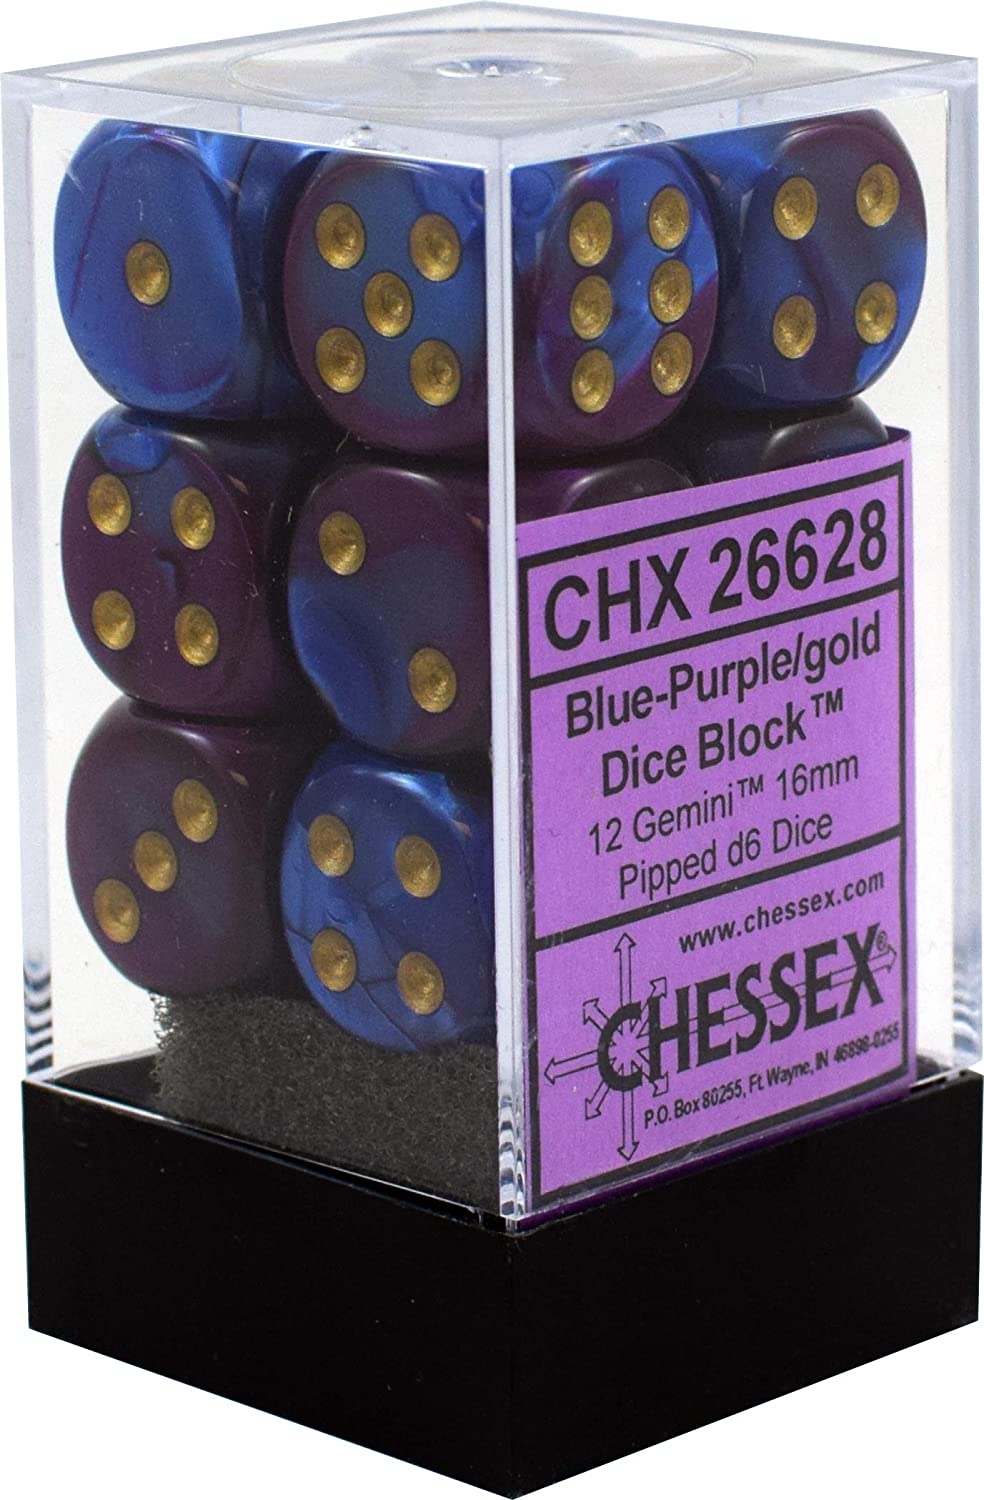 Chessex Dice: D6 Block 16mm - Gemini - Blue-Purple with Gold (CHX 26628) - Gamescape